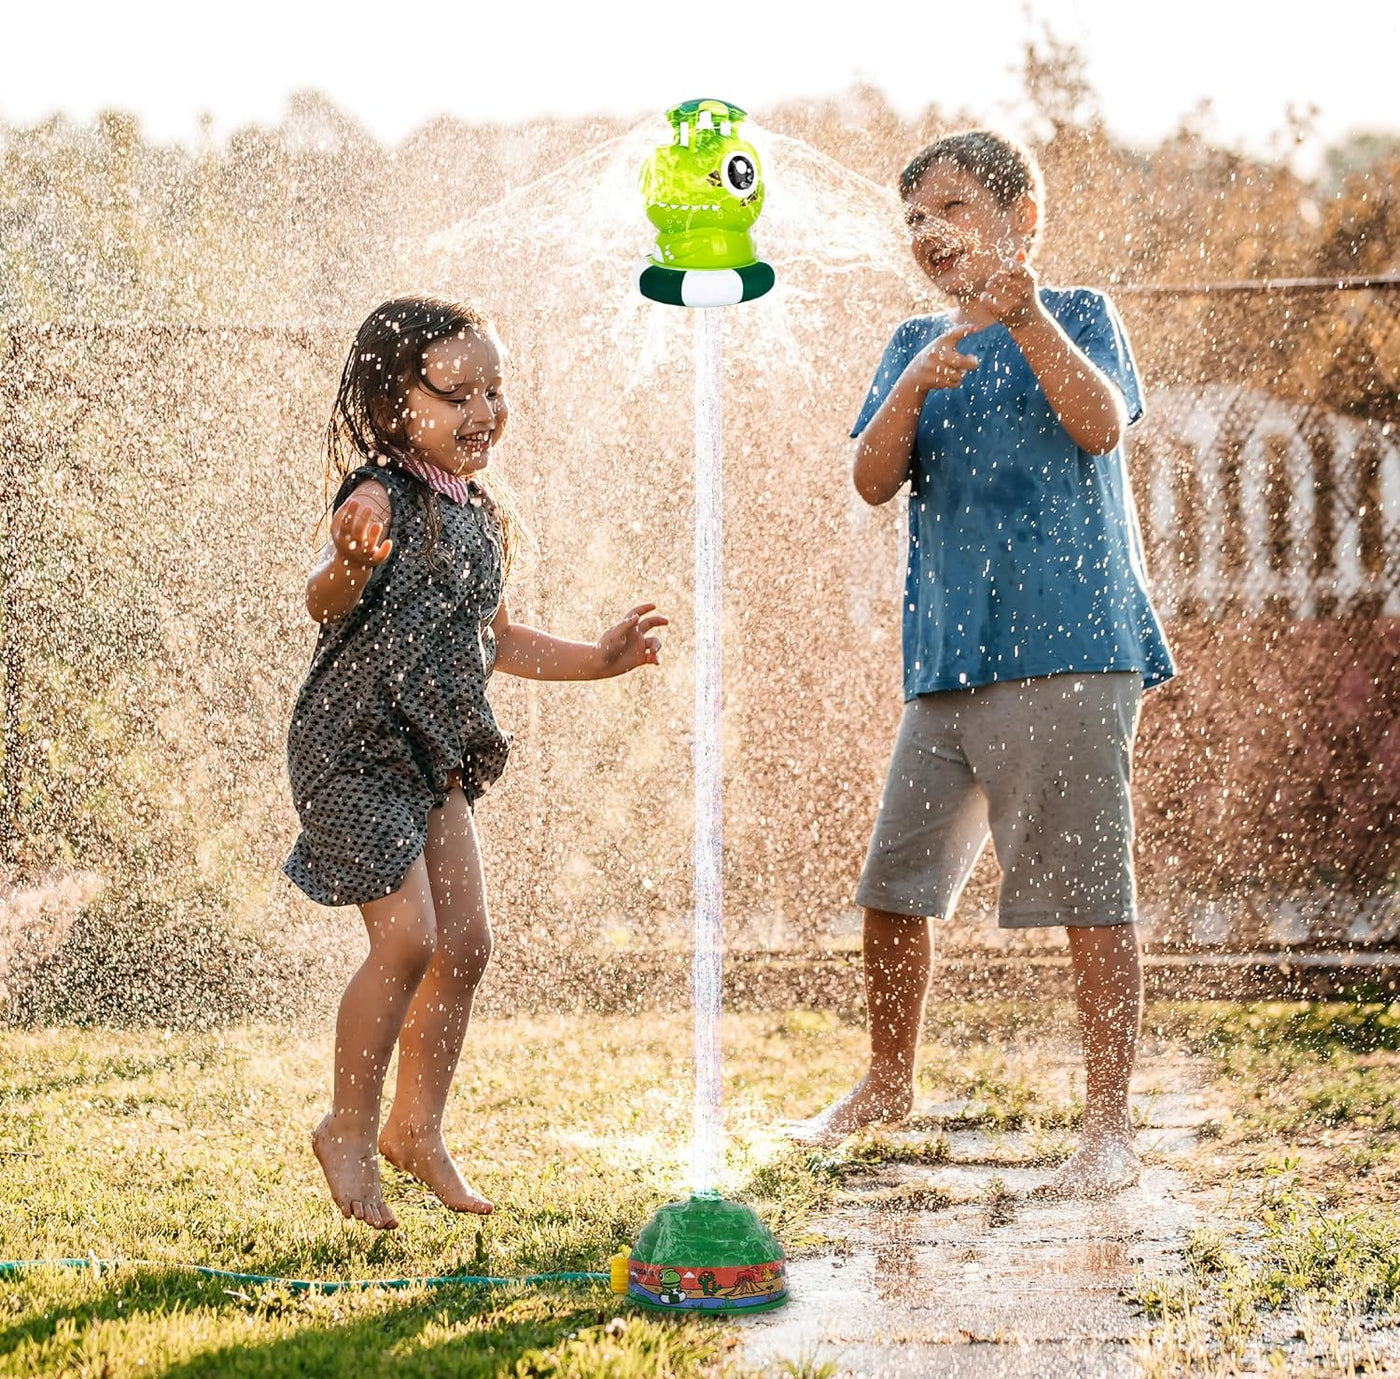 ArtCreativity Dinosaur Water Rocket Sprinkler for Kids - Dinosaur Sprinkler for Kids - Water Launcher for Backyard and Outdoor Fun - Outdoor Water Play Aqua Rocket for Summer Fun